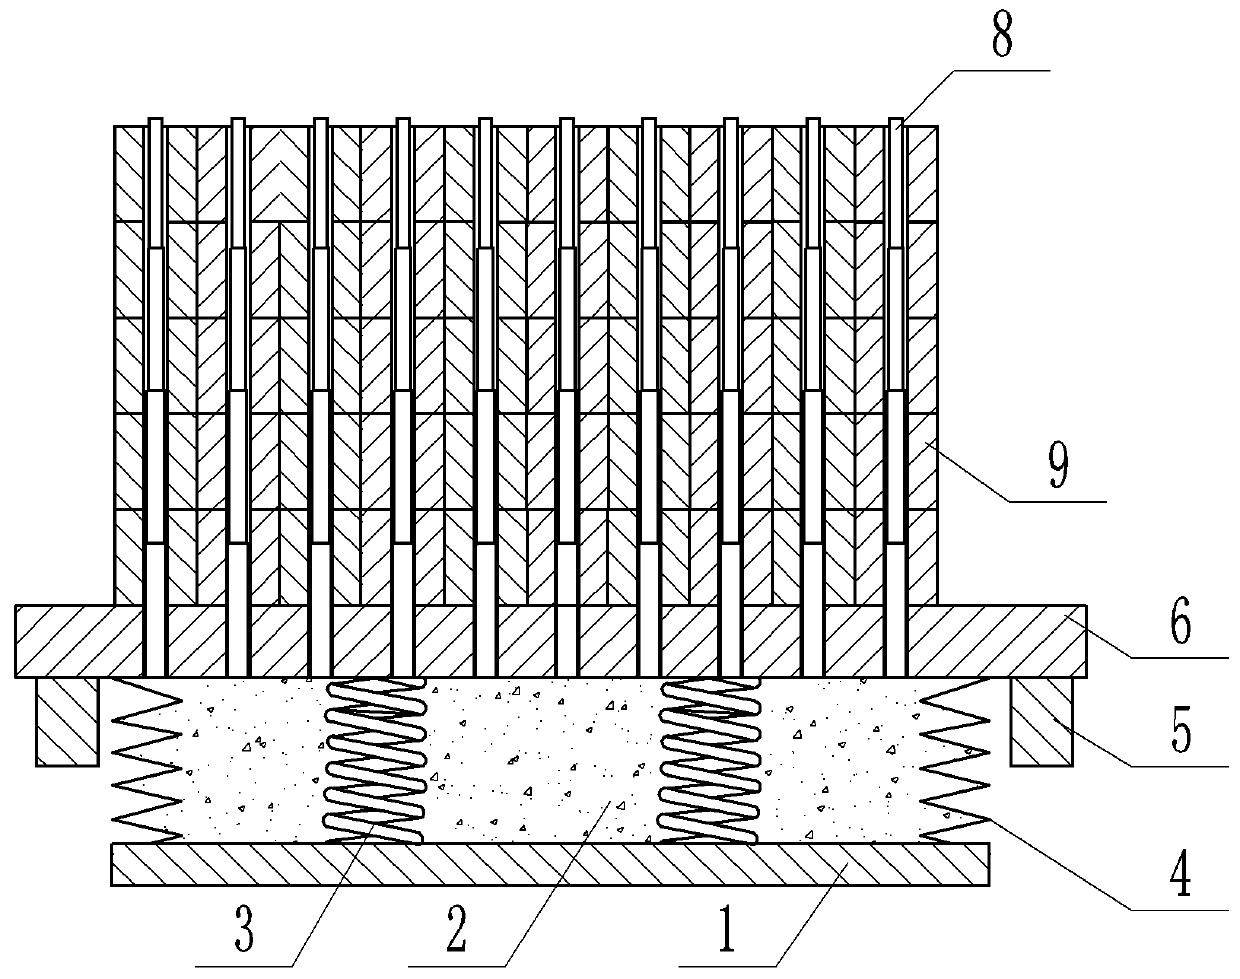 Fixtures for handling insulation bricks